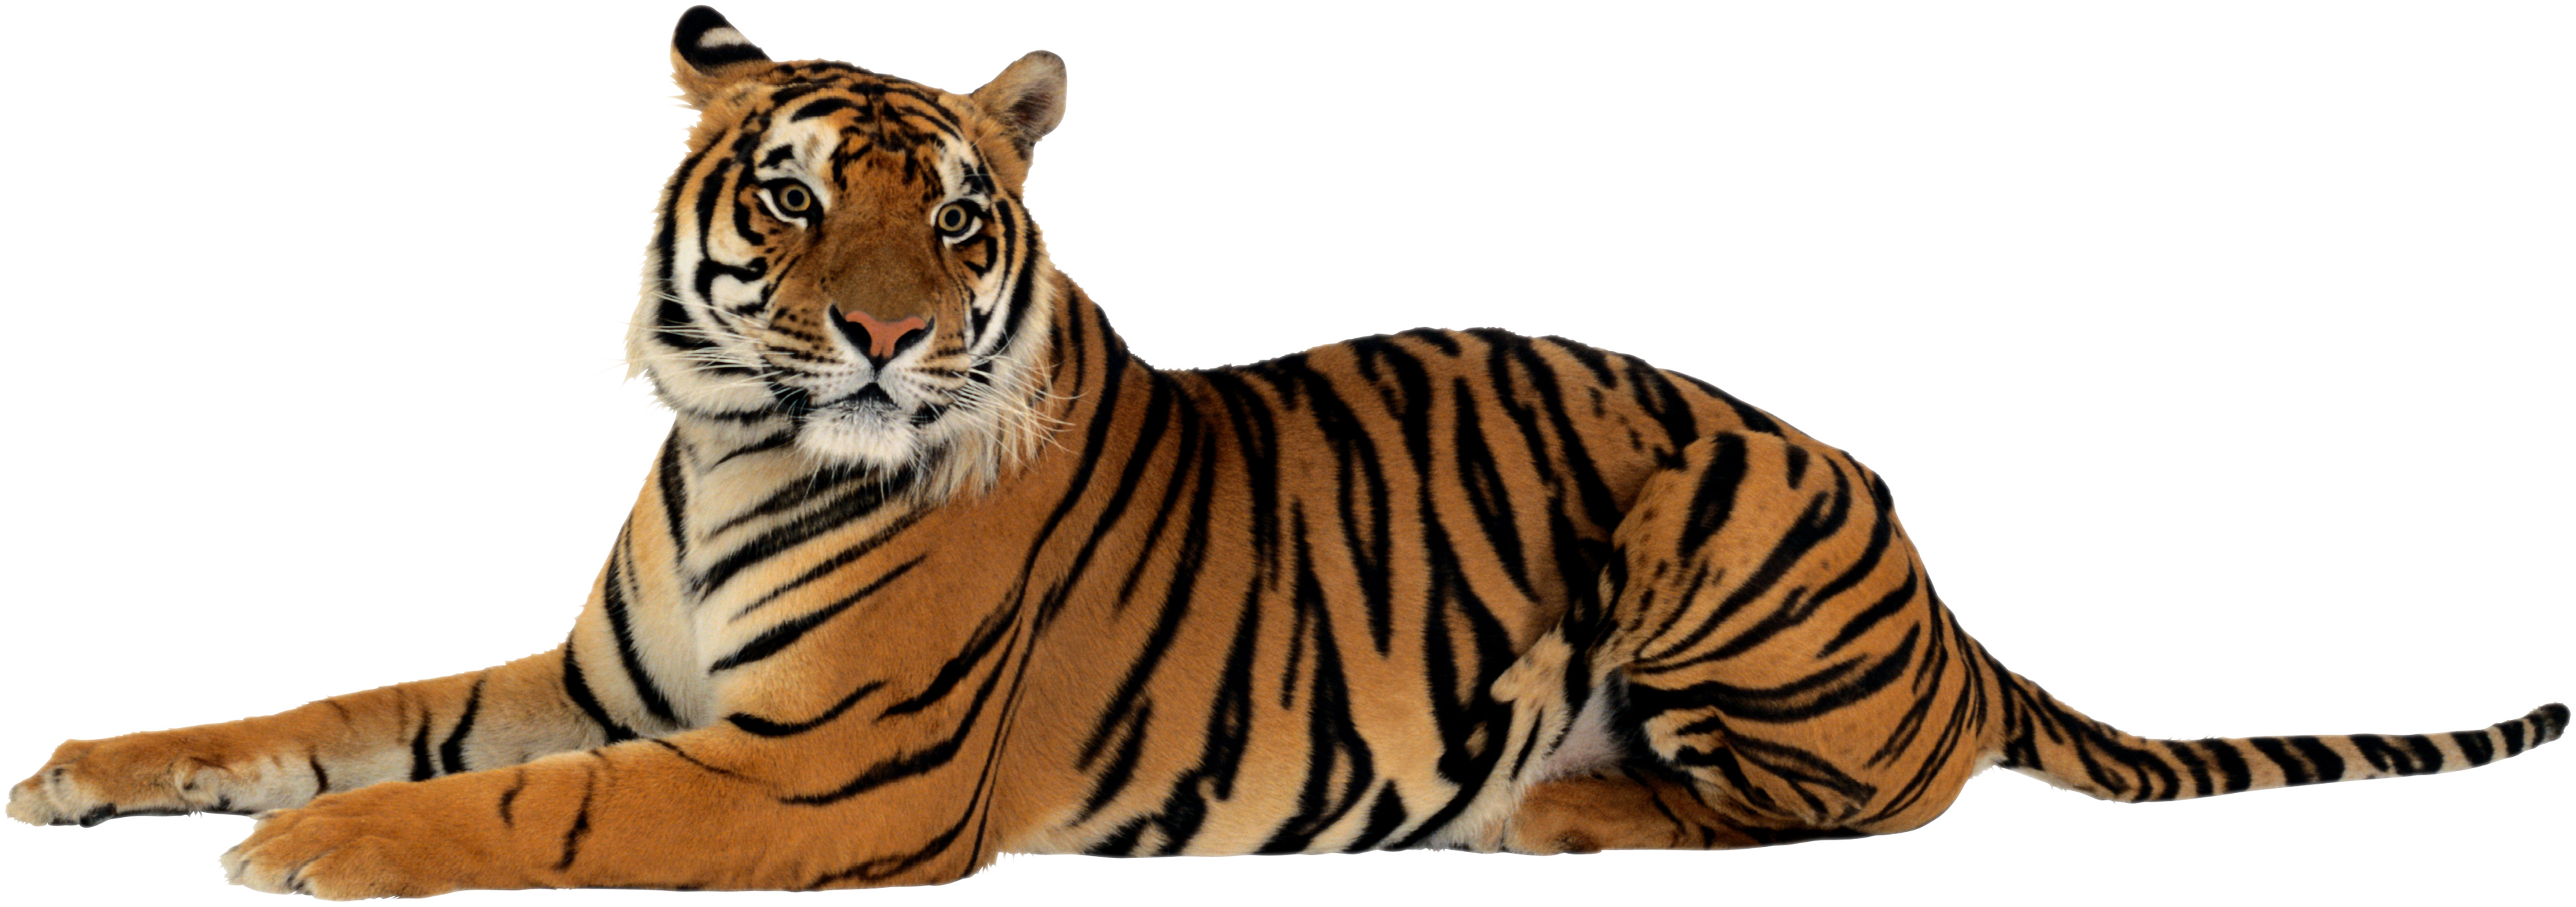 Tiger No Background